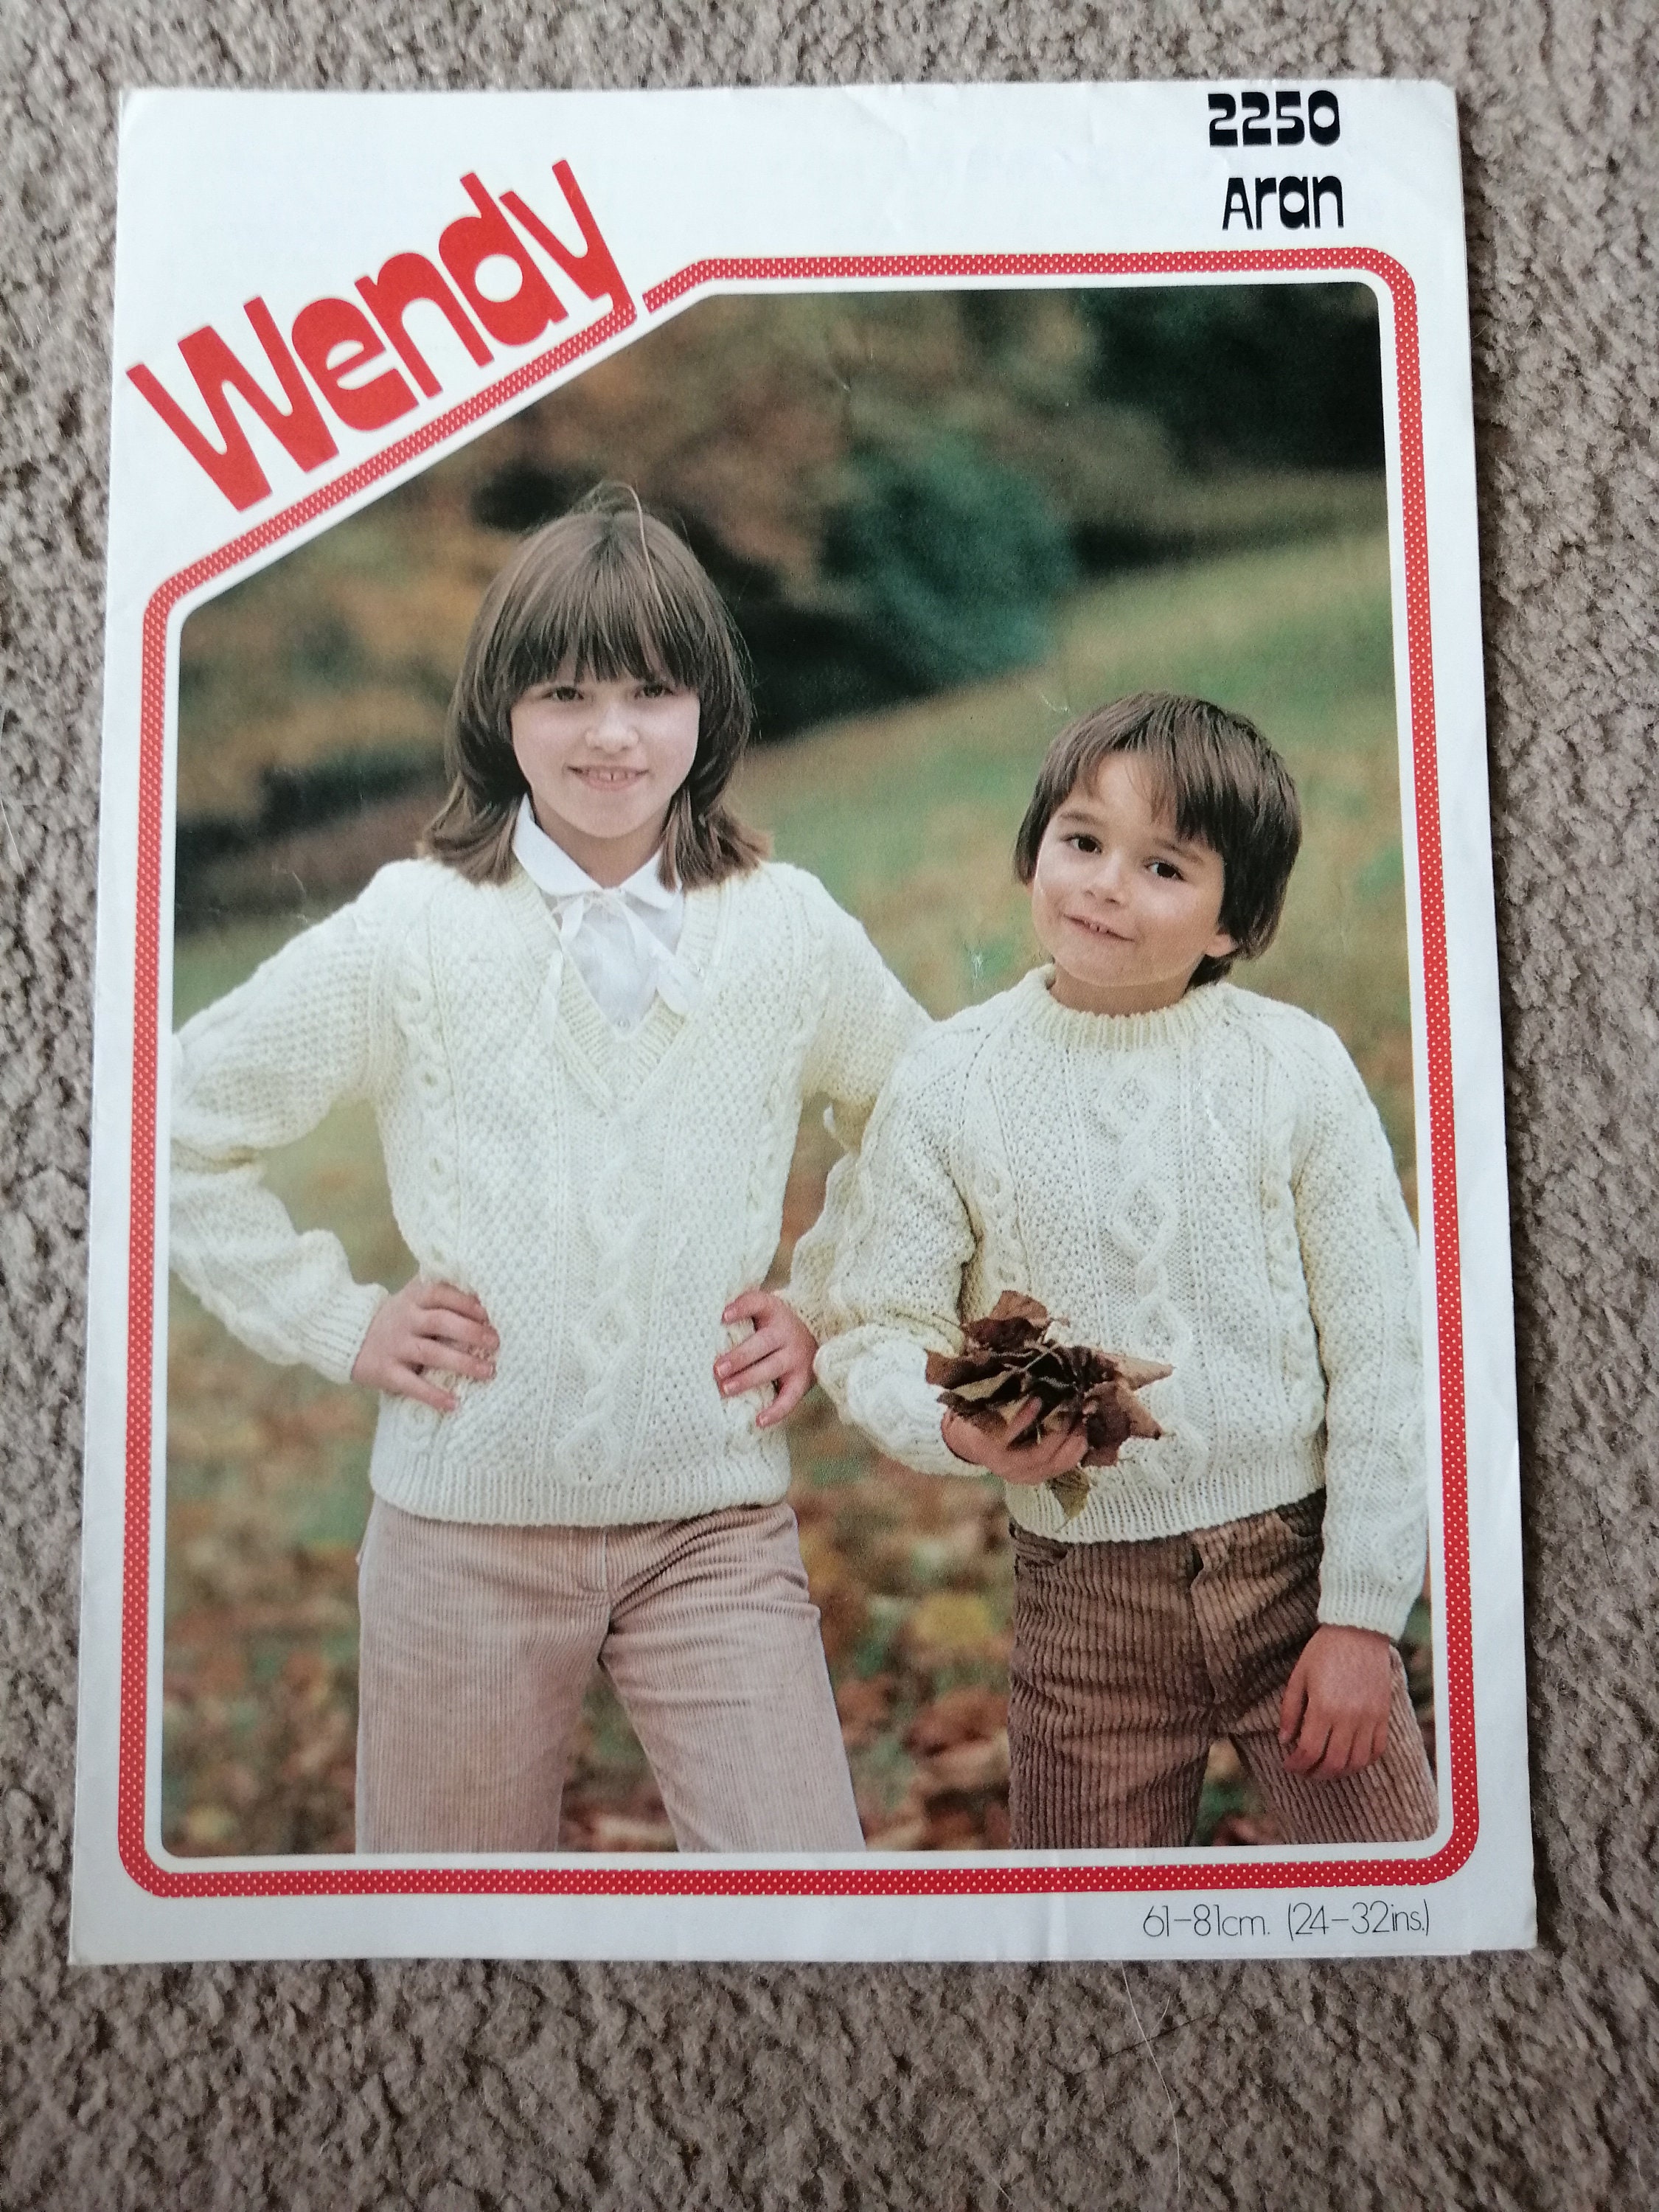 WENDY childs aran Knit knitting pattern V neck sweater jumper | Etsy